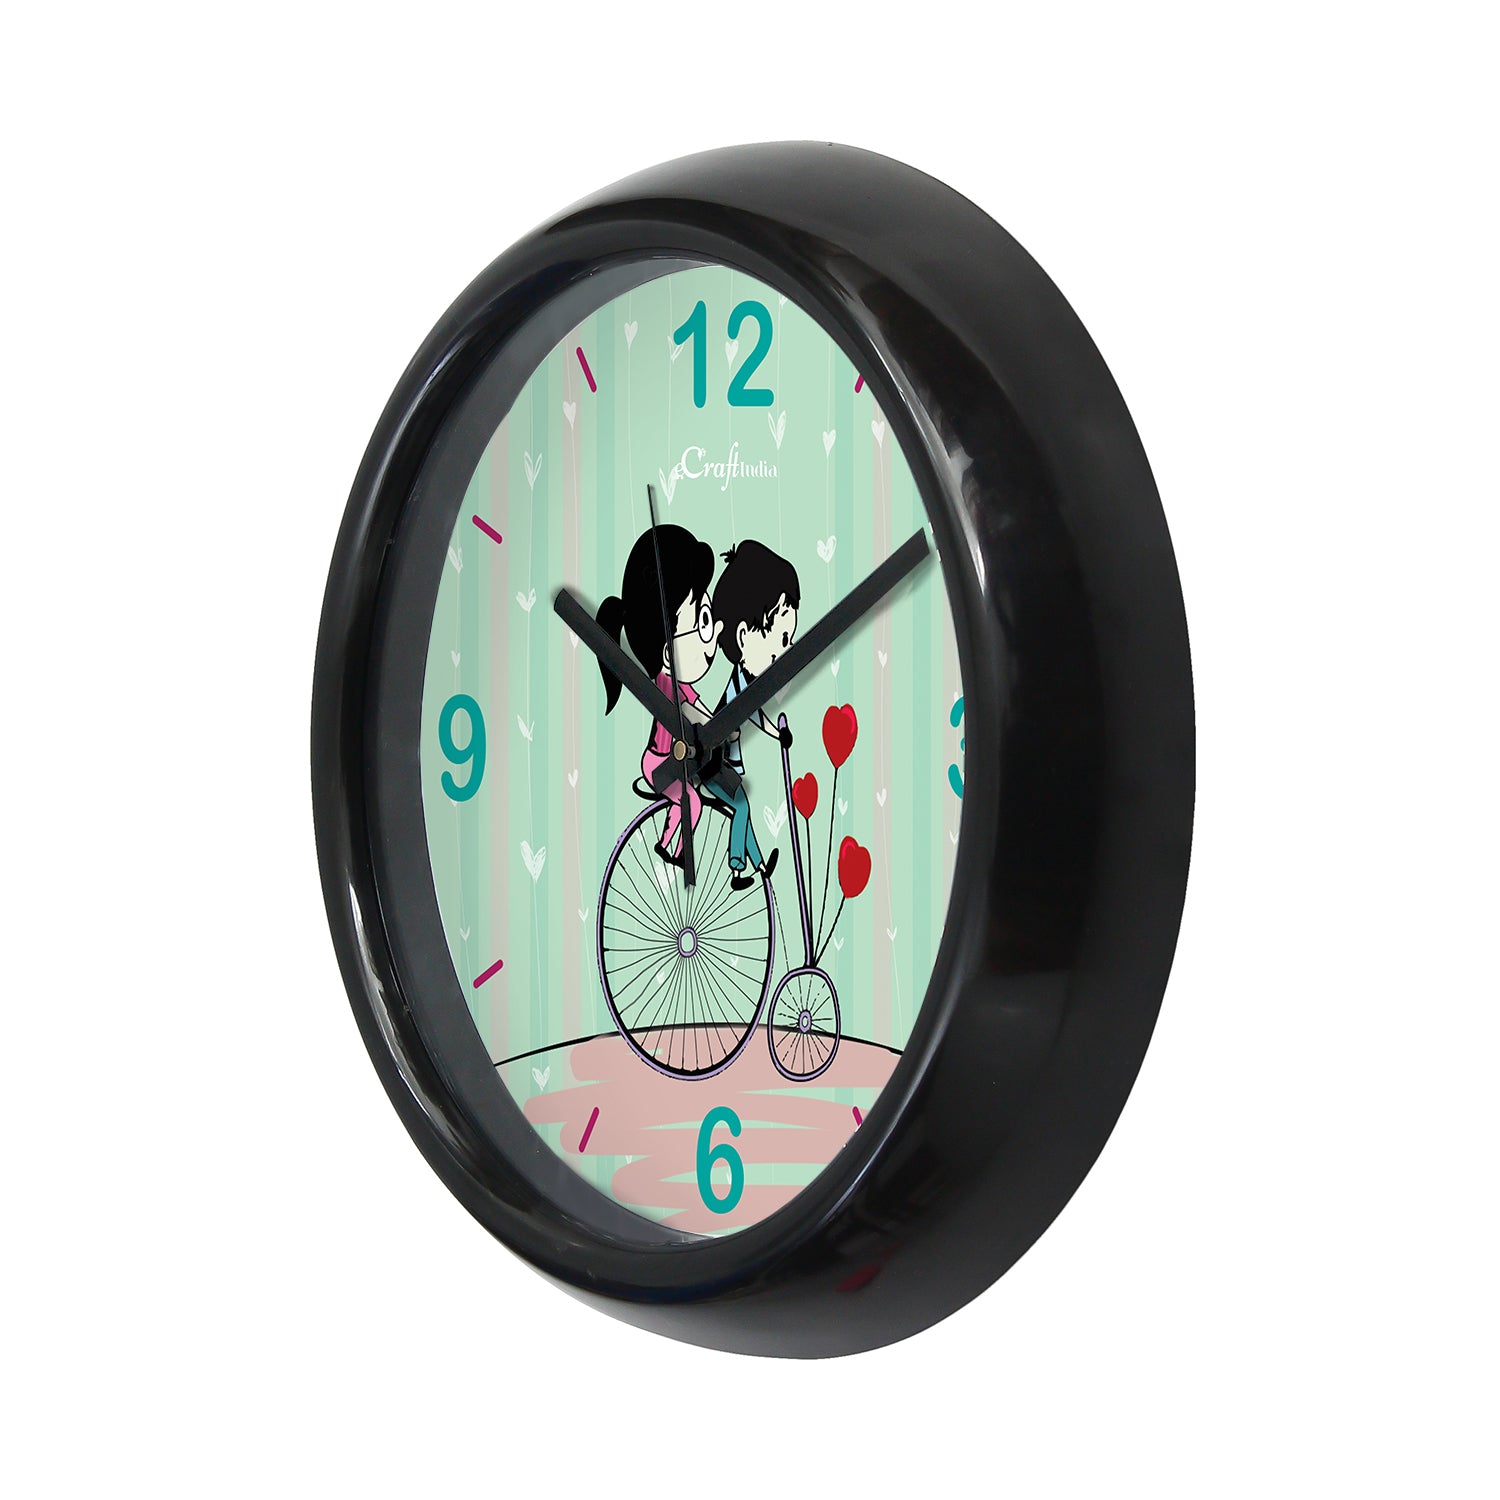 "Couple Riding Bicycle" Green Designer Round Analog Black Wall Clock 4